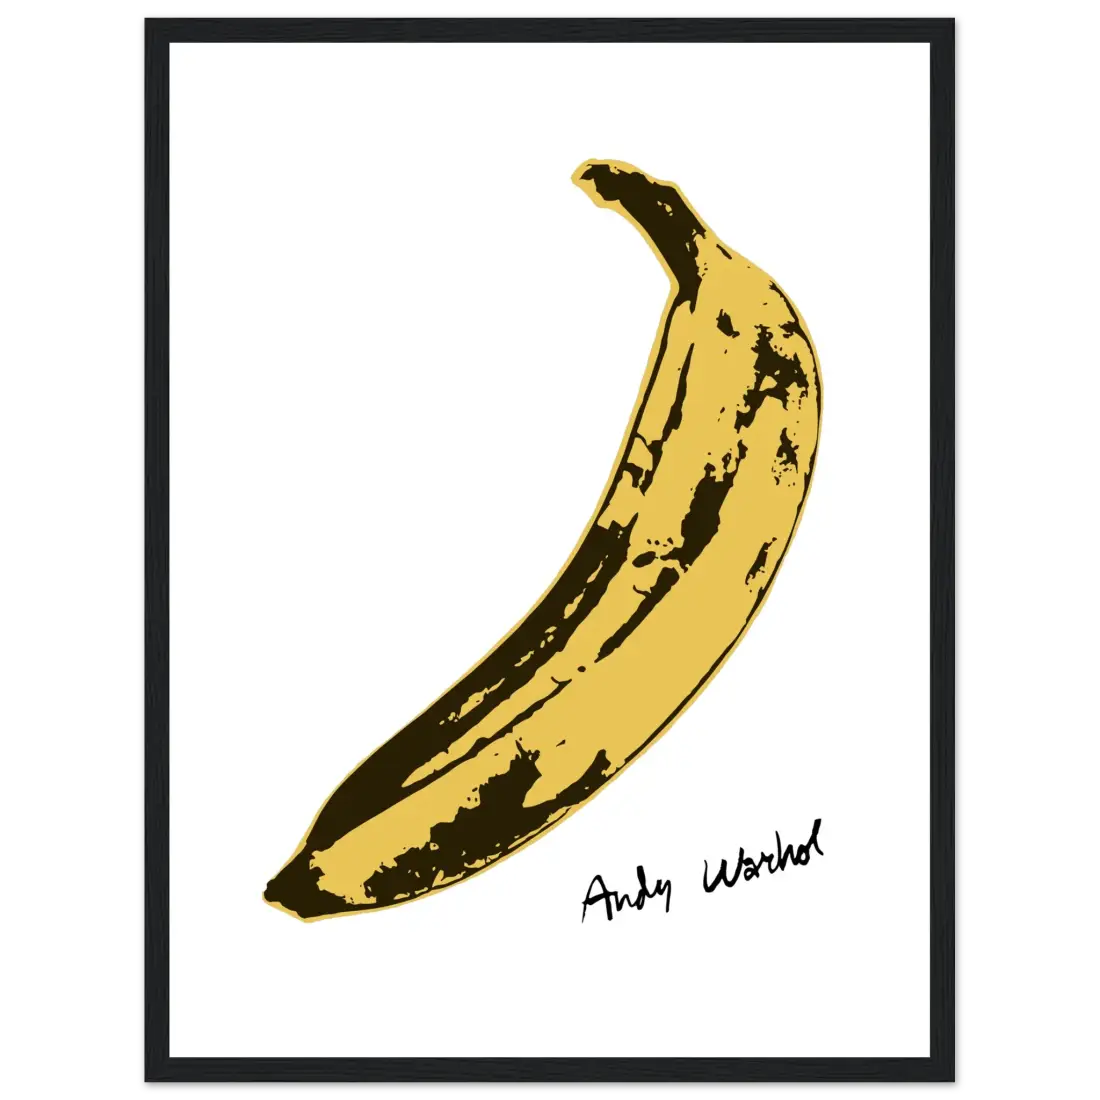 Andy Warhol's Banana, 1967 Pop Art Poster-9